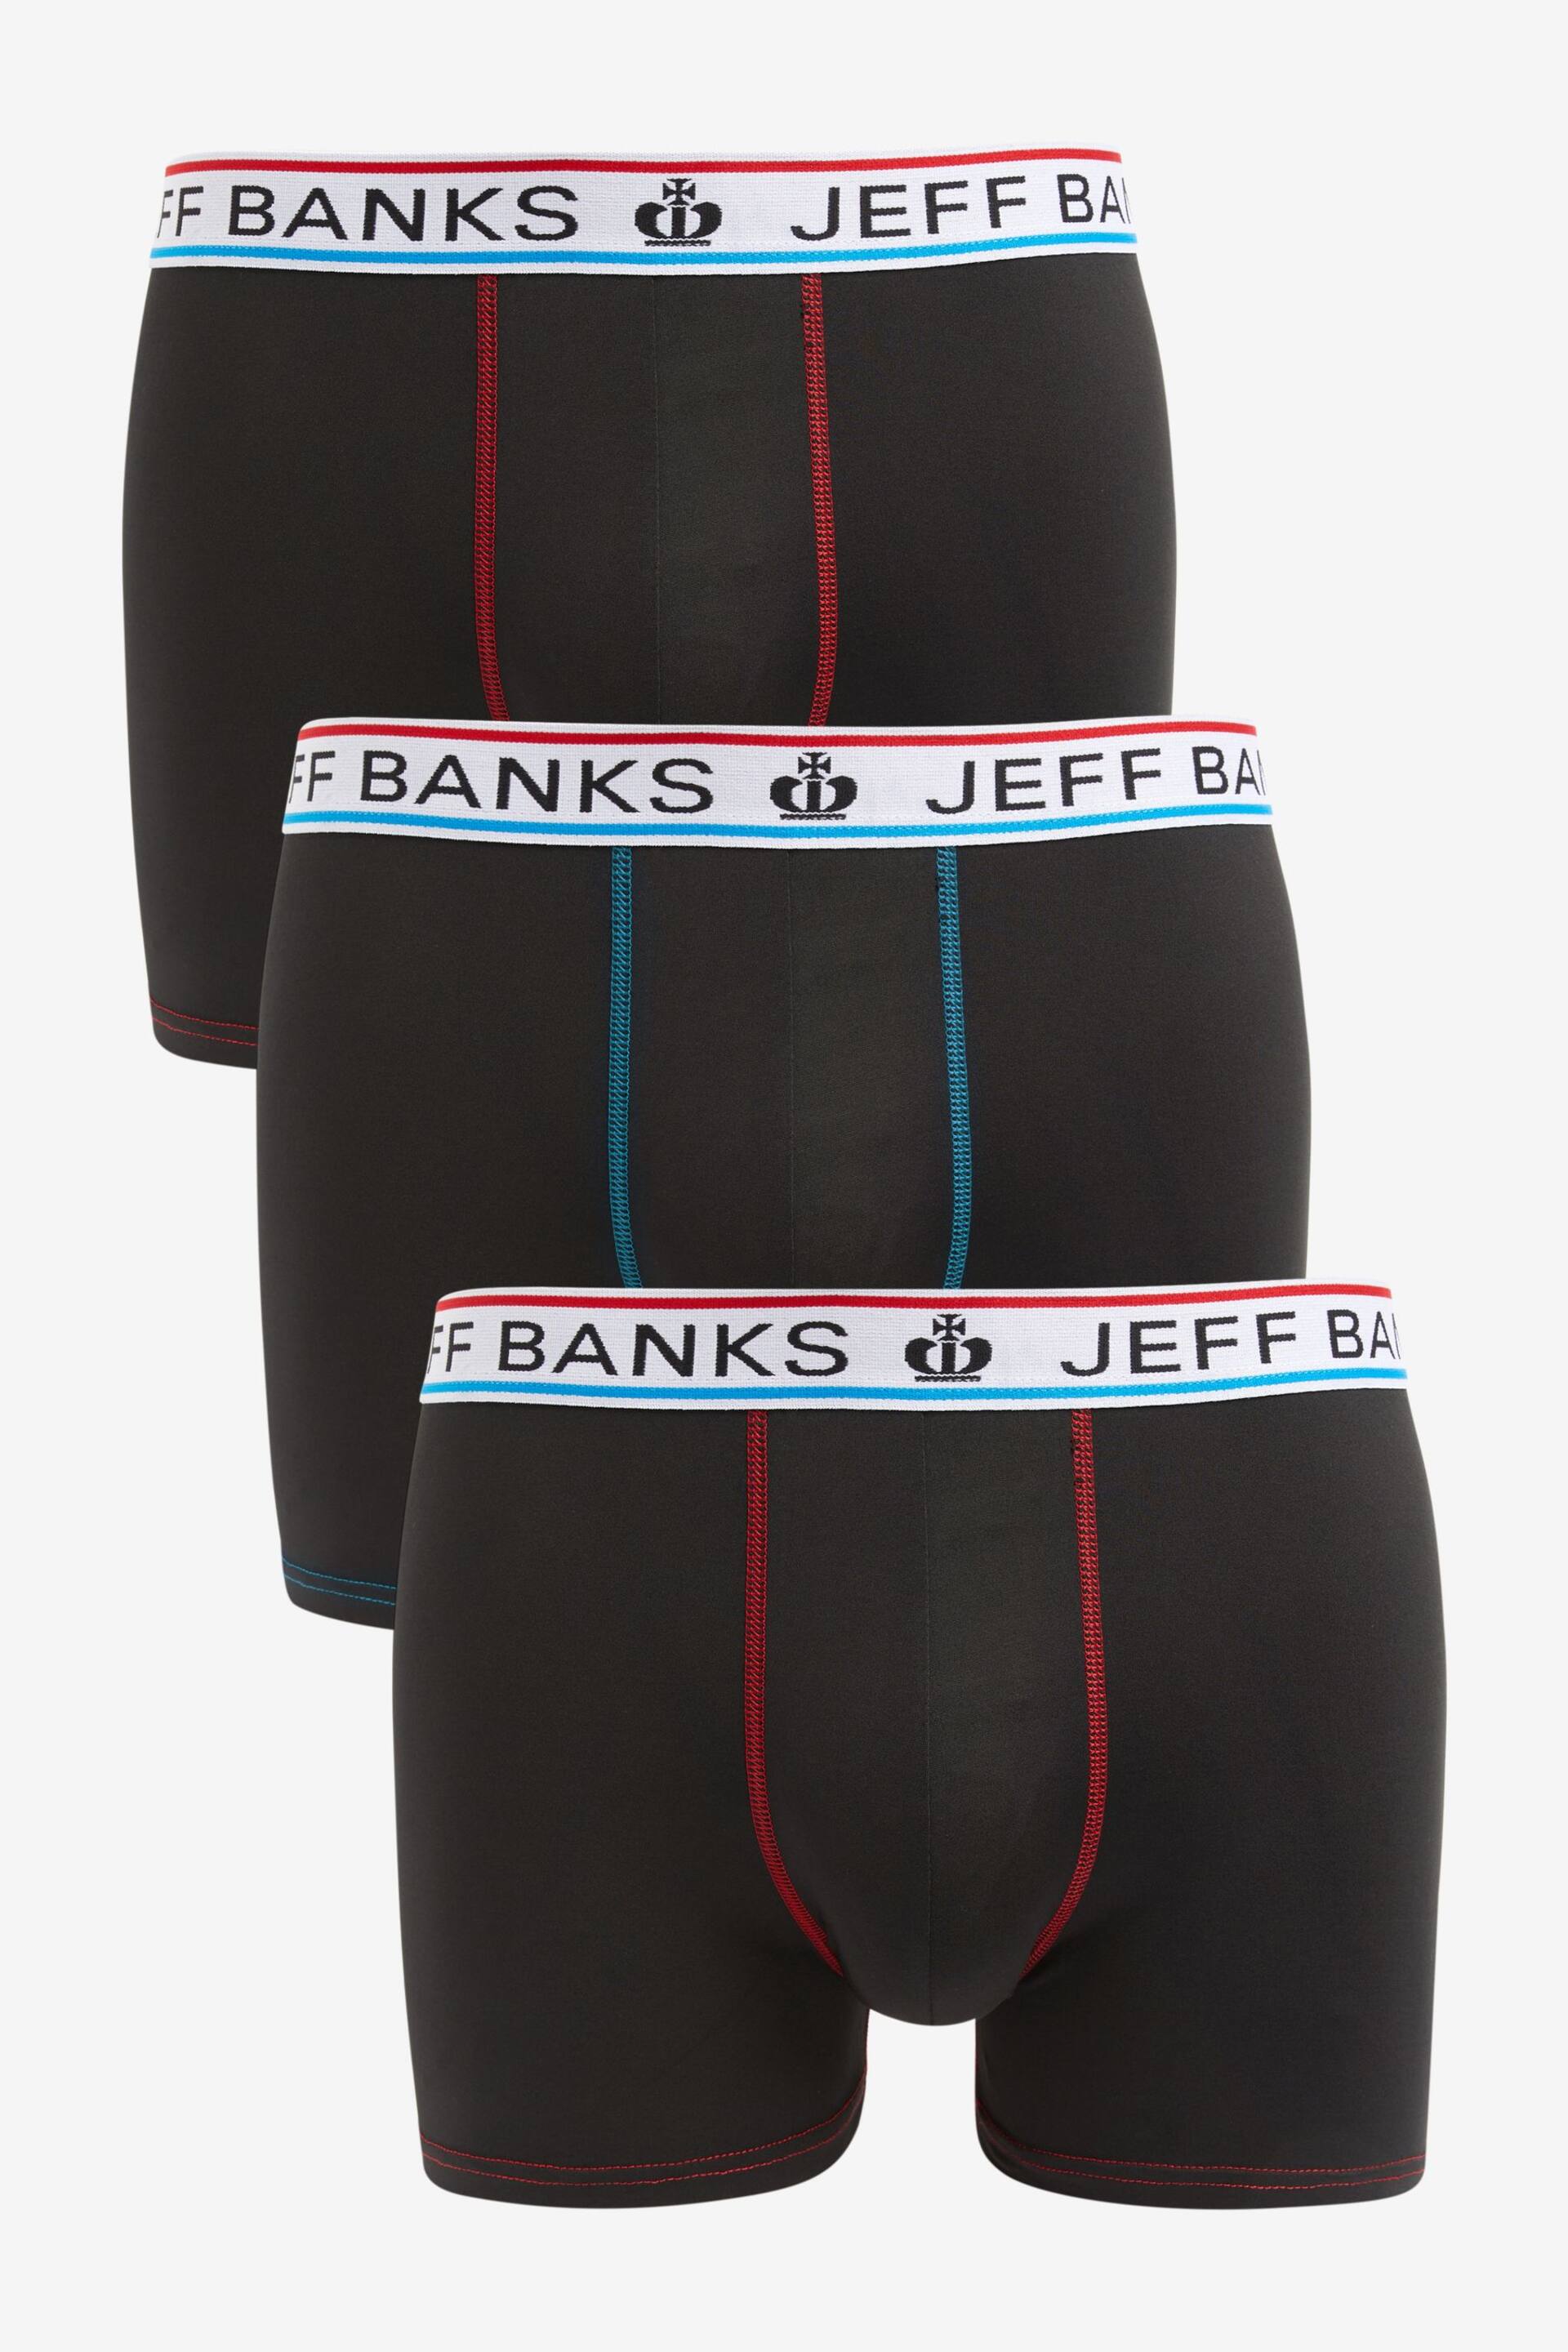 Jeff Banks Black Lightweight Super Smooth Sports Underwear 3 PK - Image 1 of 4